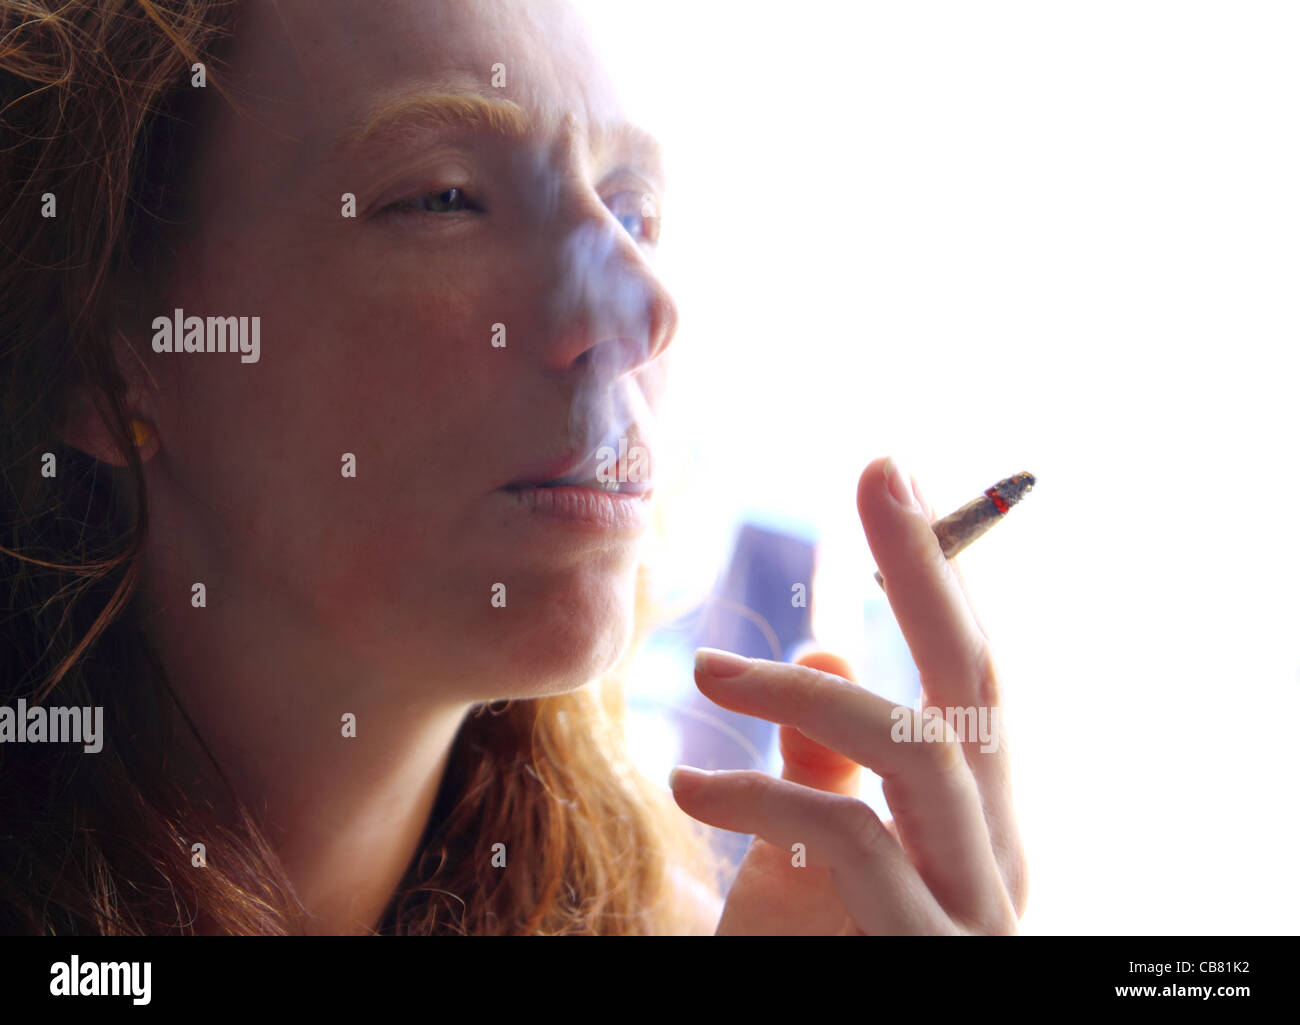 female smoker woman with cigarette beathing smoke Stock Photo